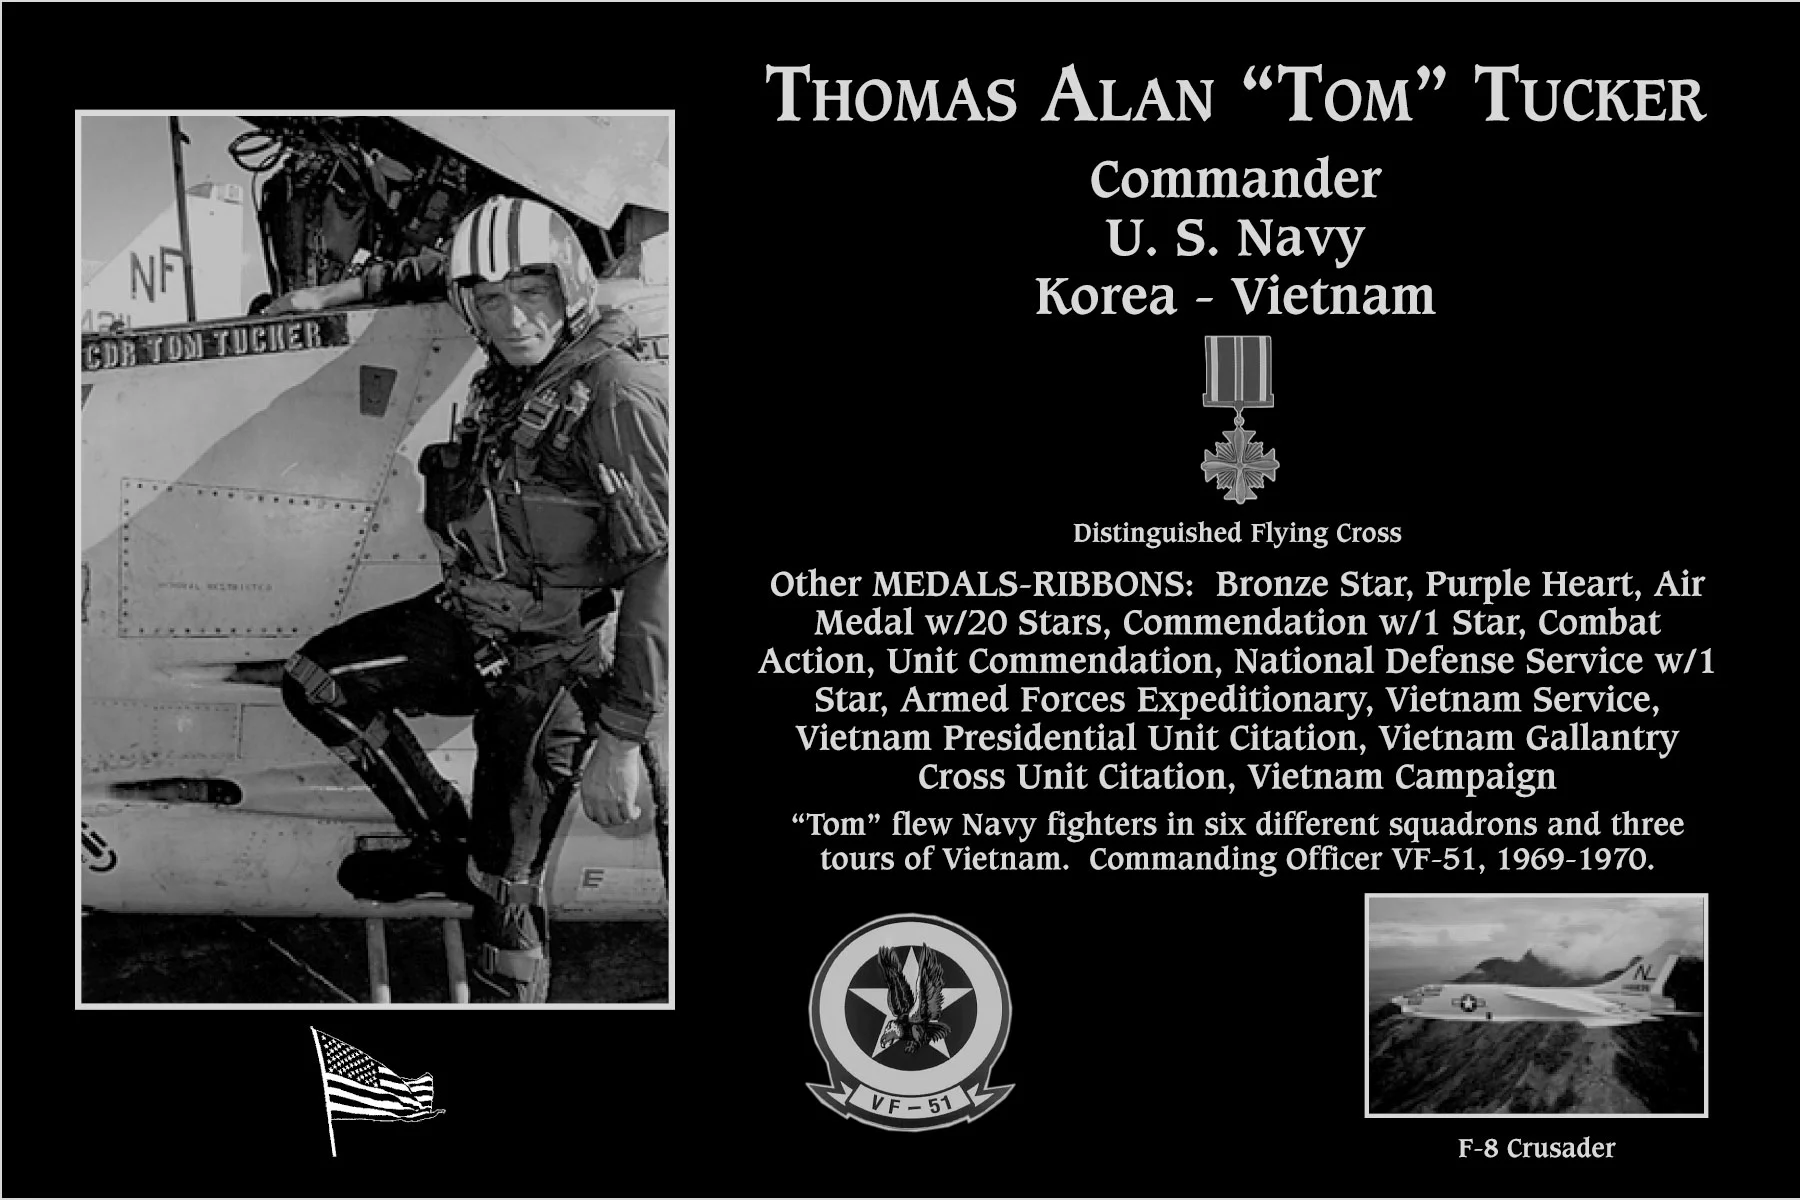 Thomas Alan “Tom” Tucker